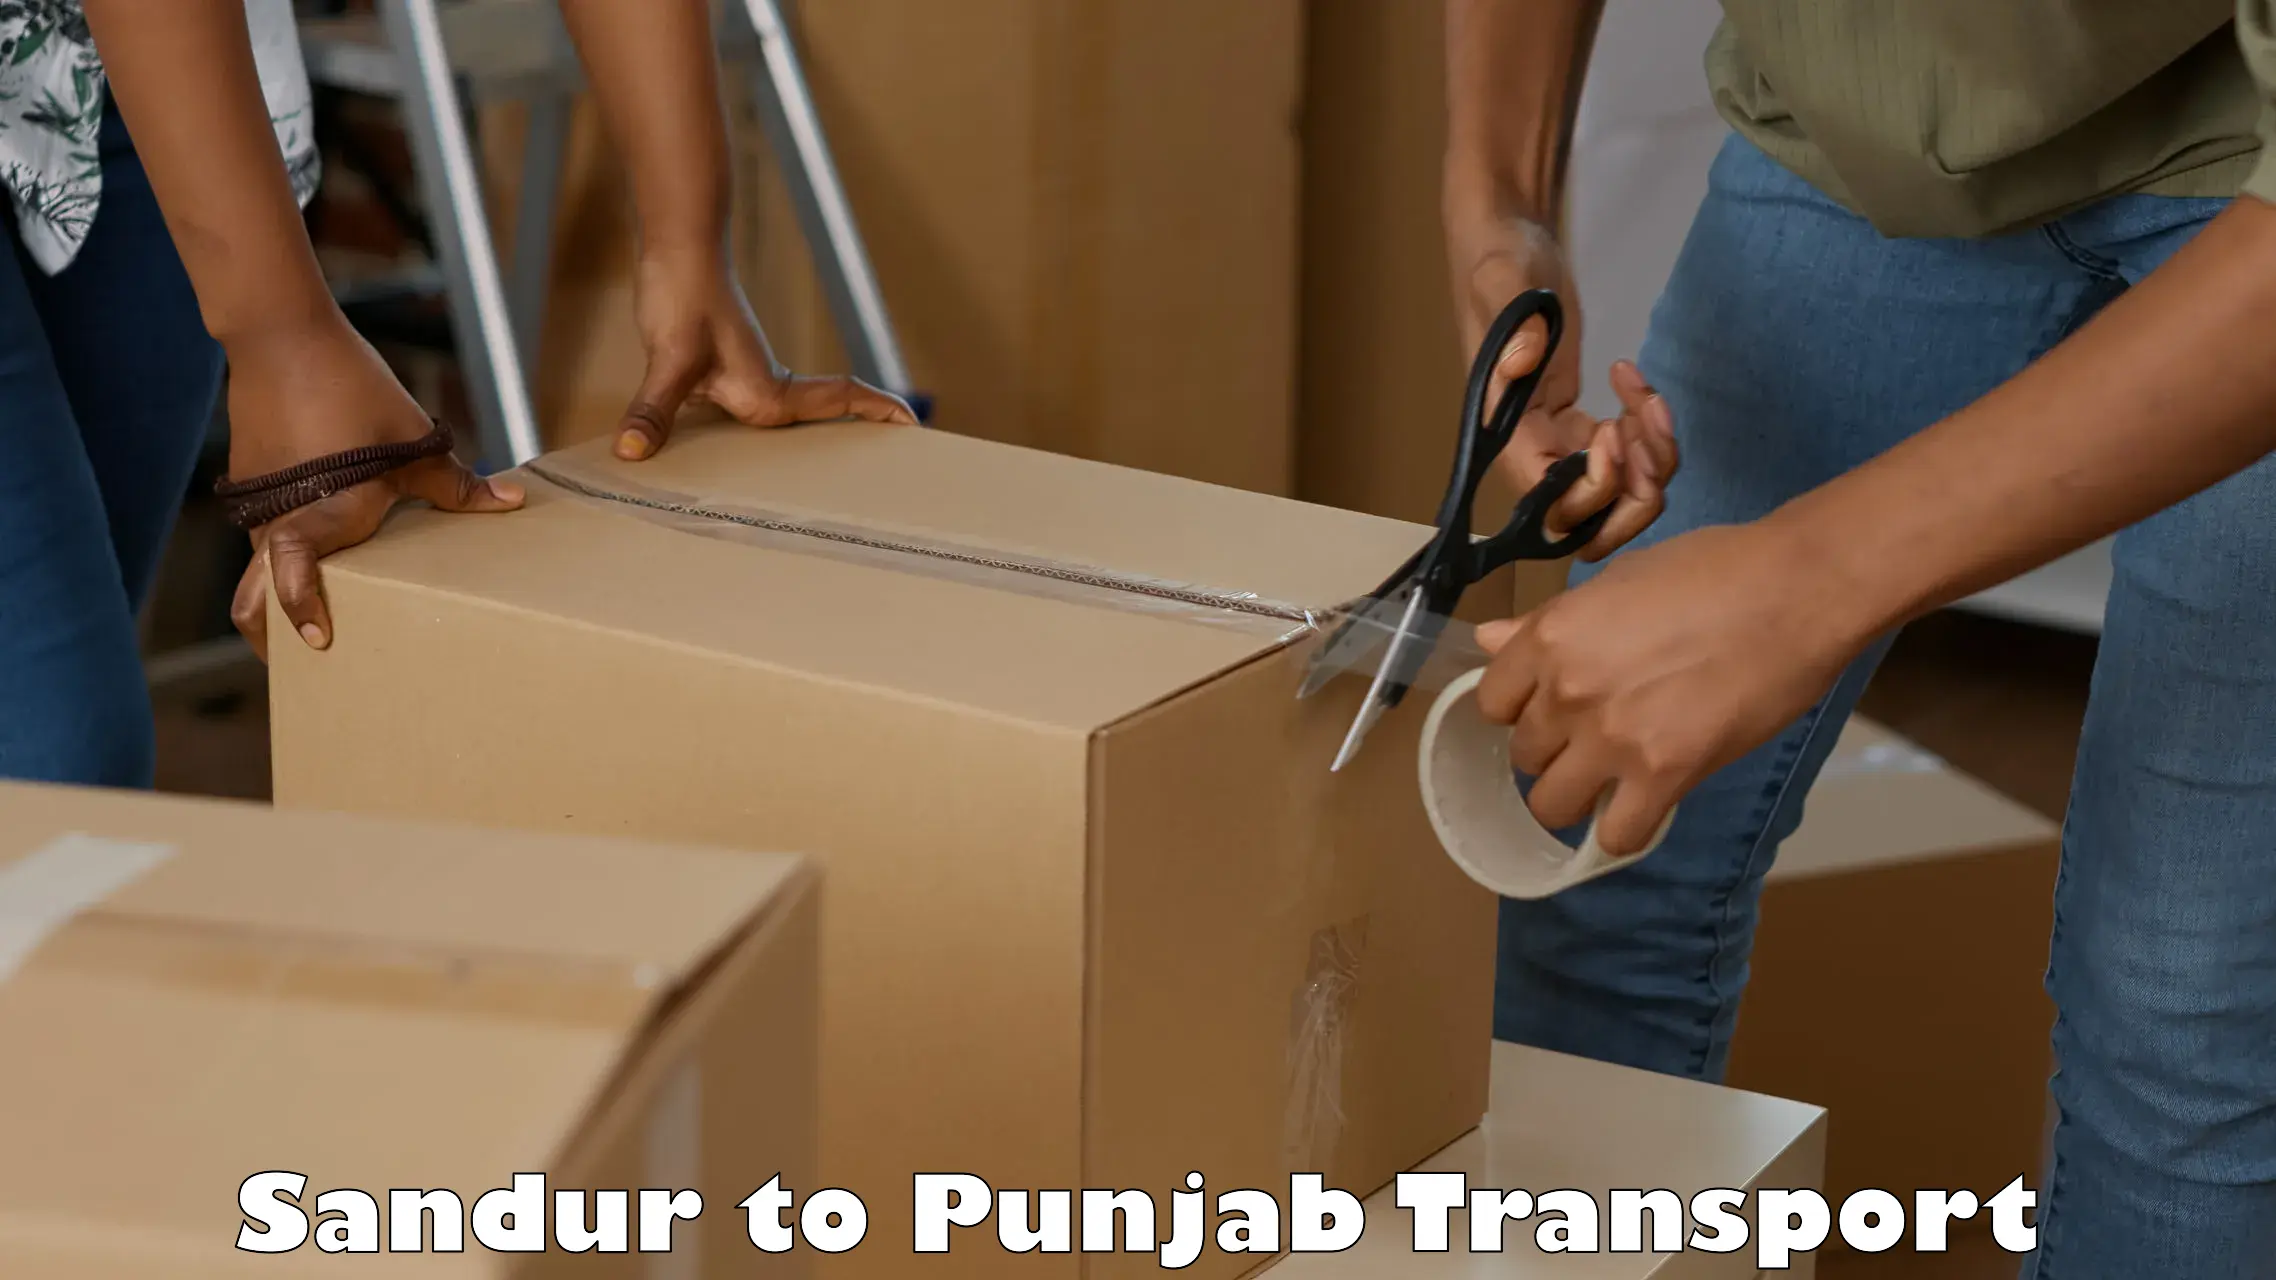 Daily transport service Sandur to Punjab